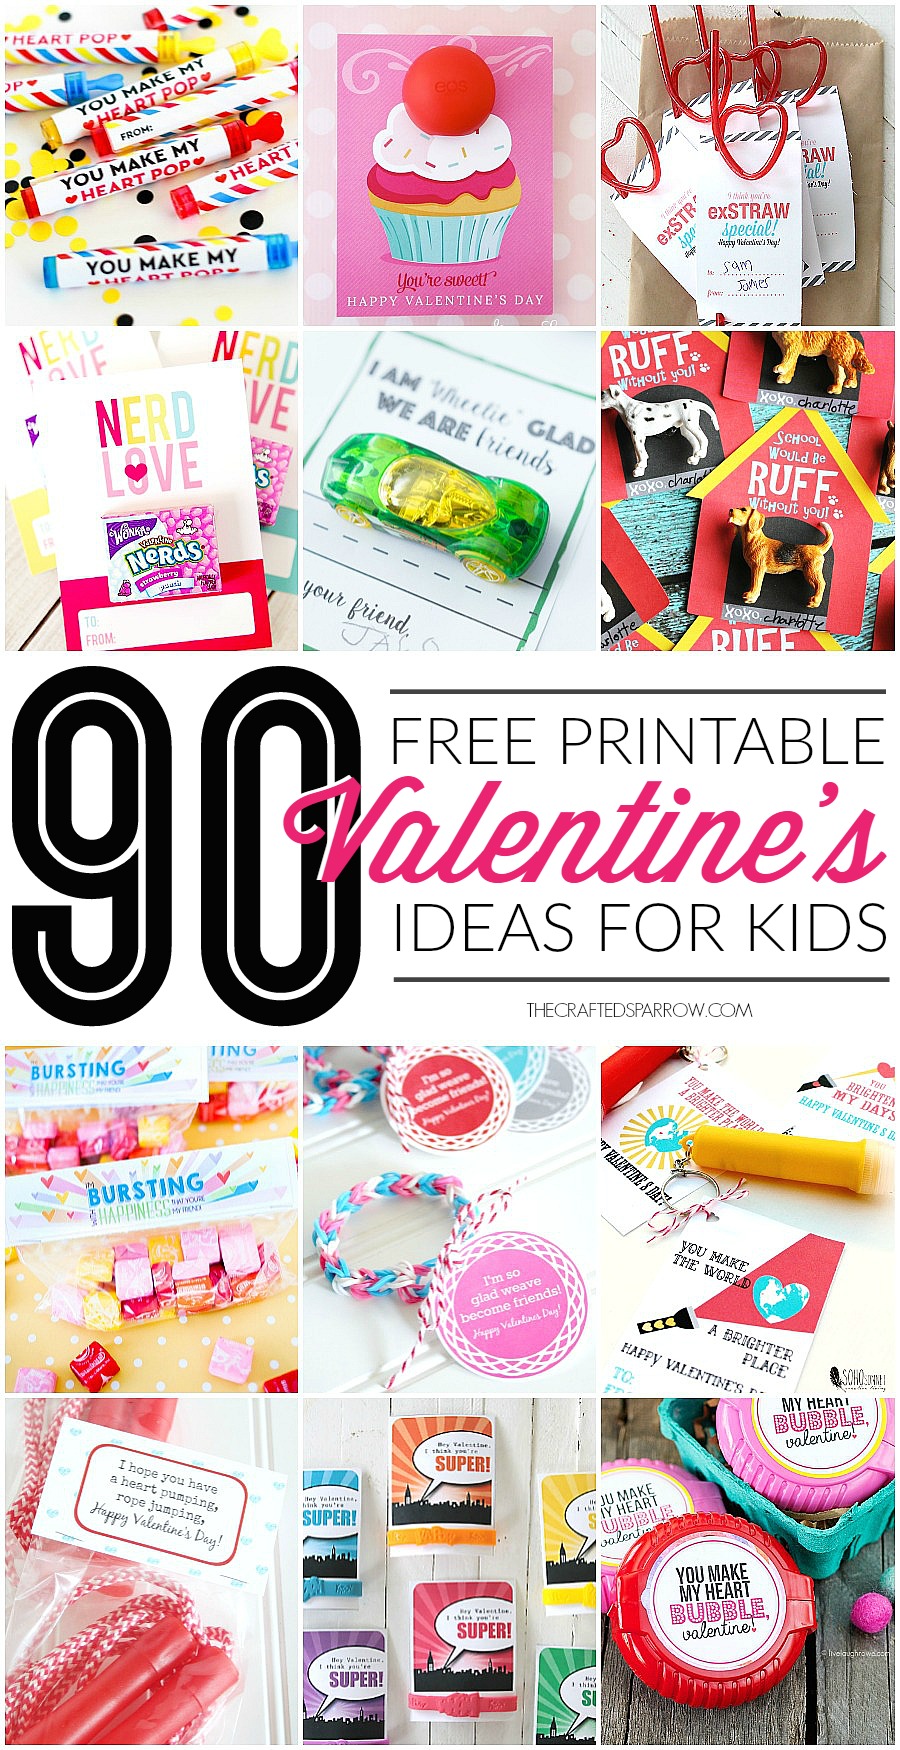 90 Free Printable Valentine's Day Ideas